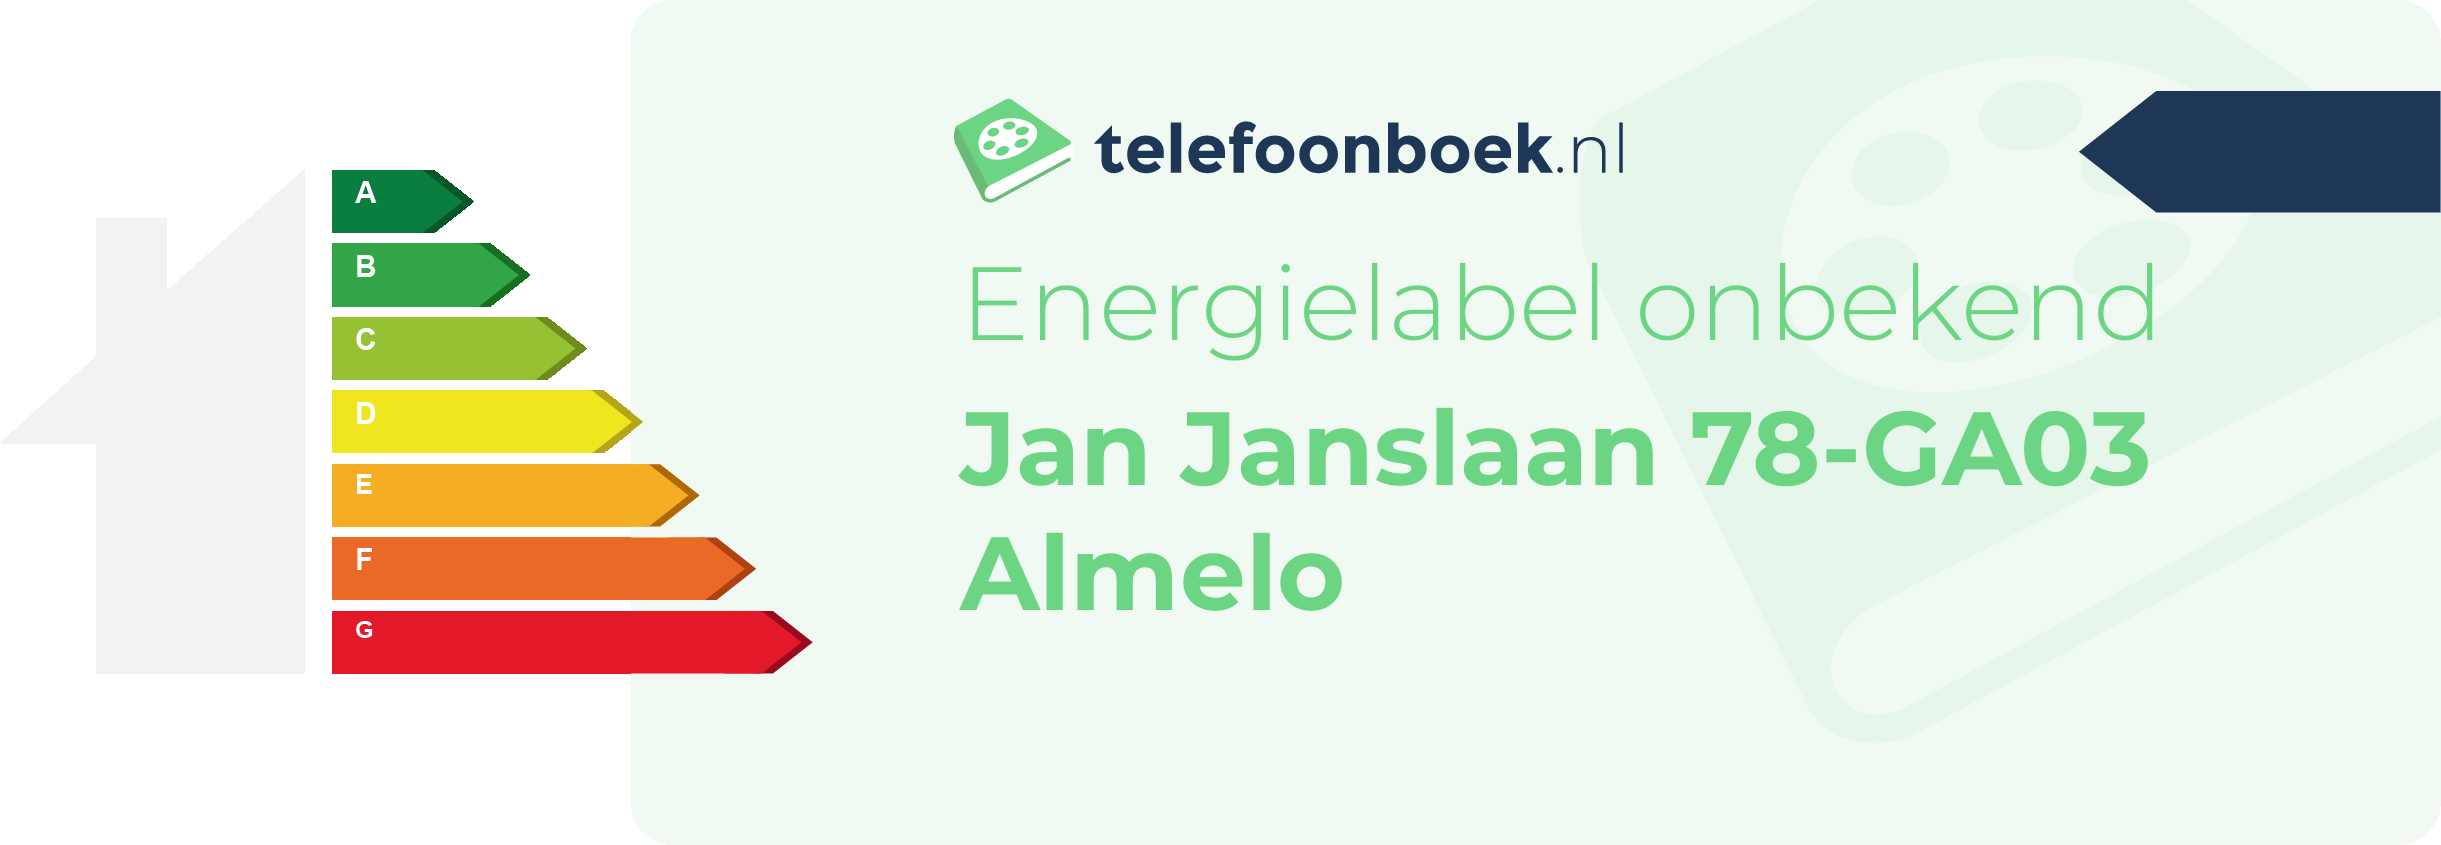 Energielabel Jan Janslaan 78-GA03 Almelo